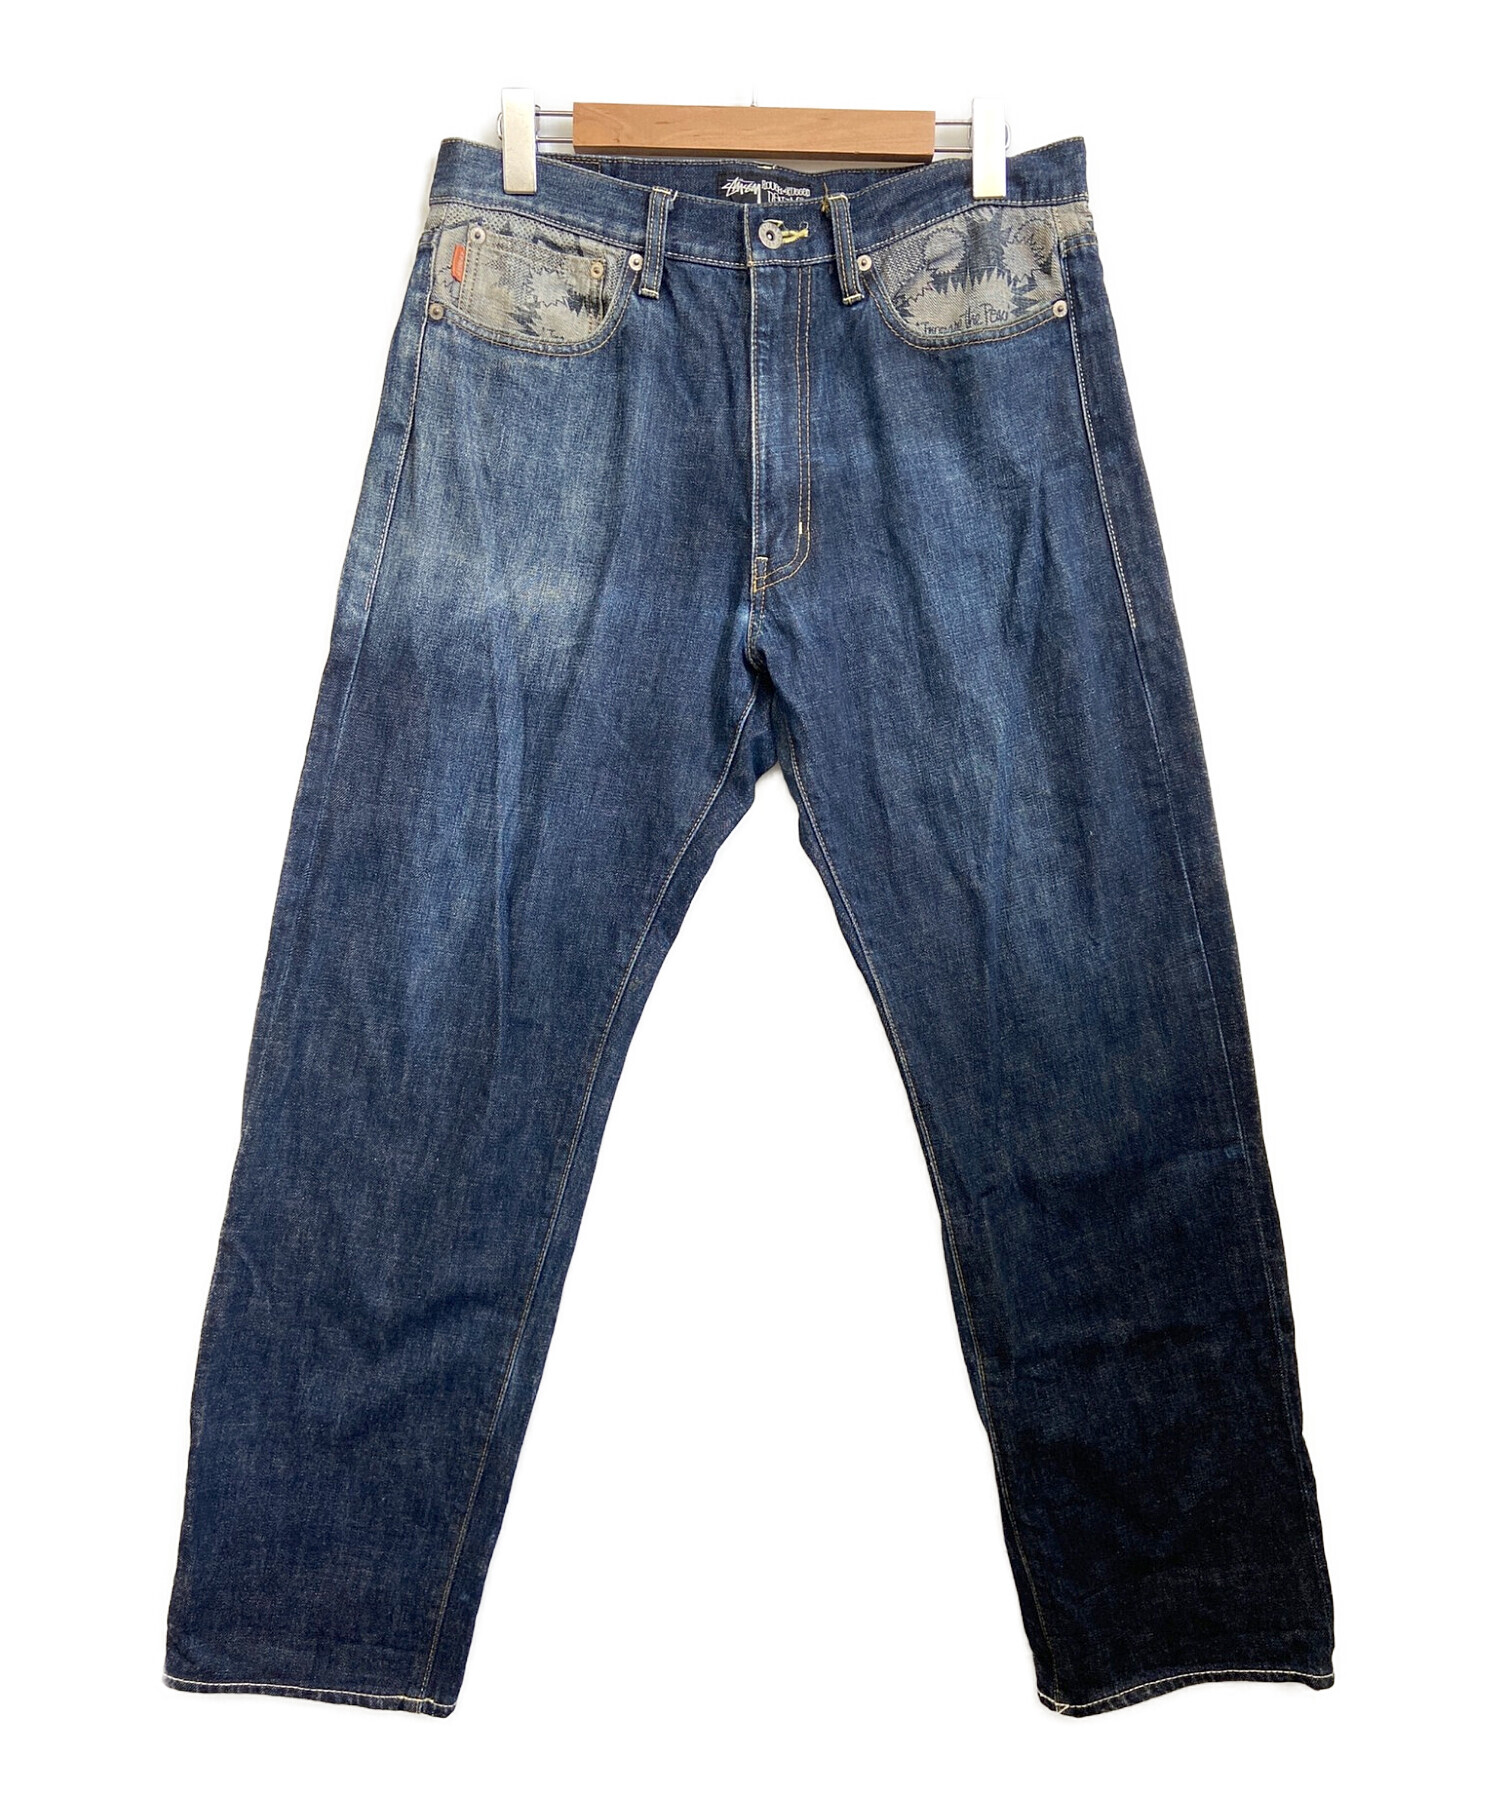 stussy denim jeans ステューシー デニムパンツ ジーパン 32